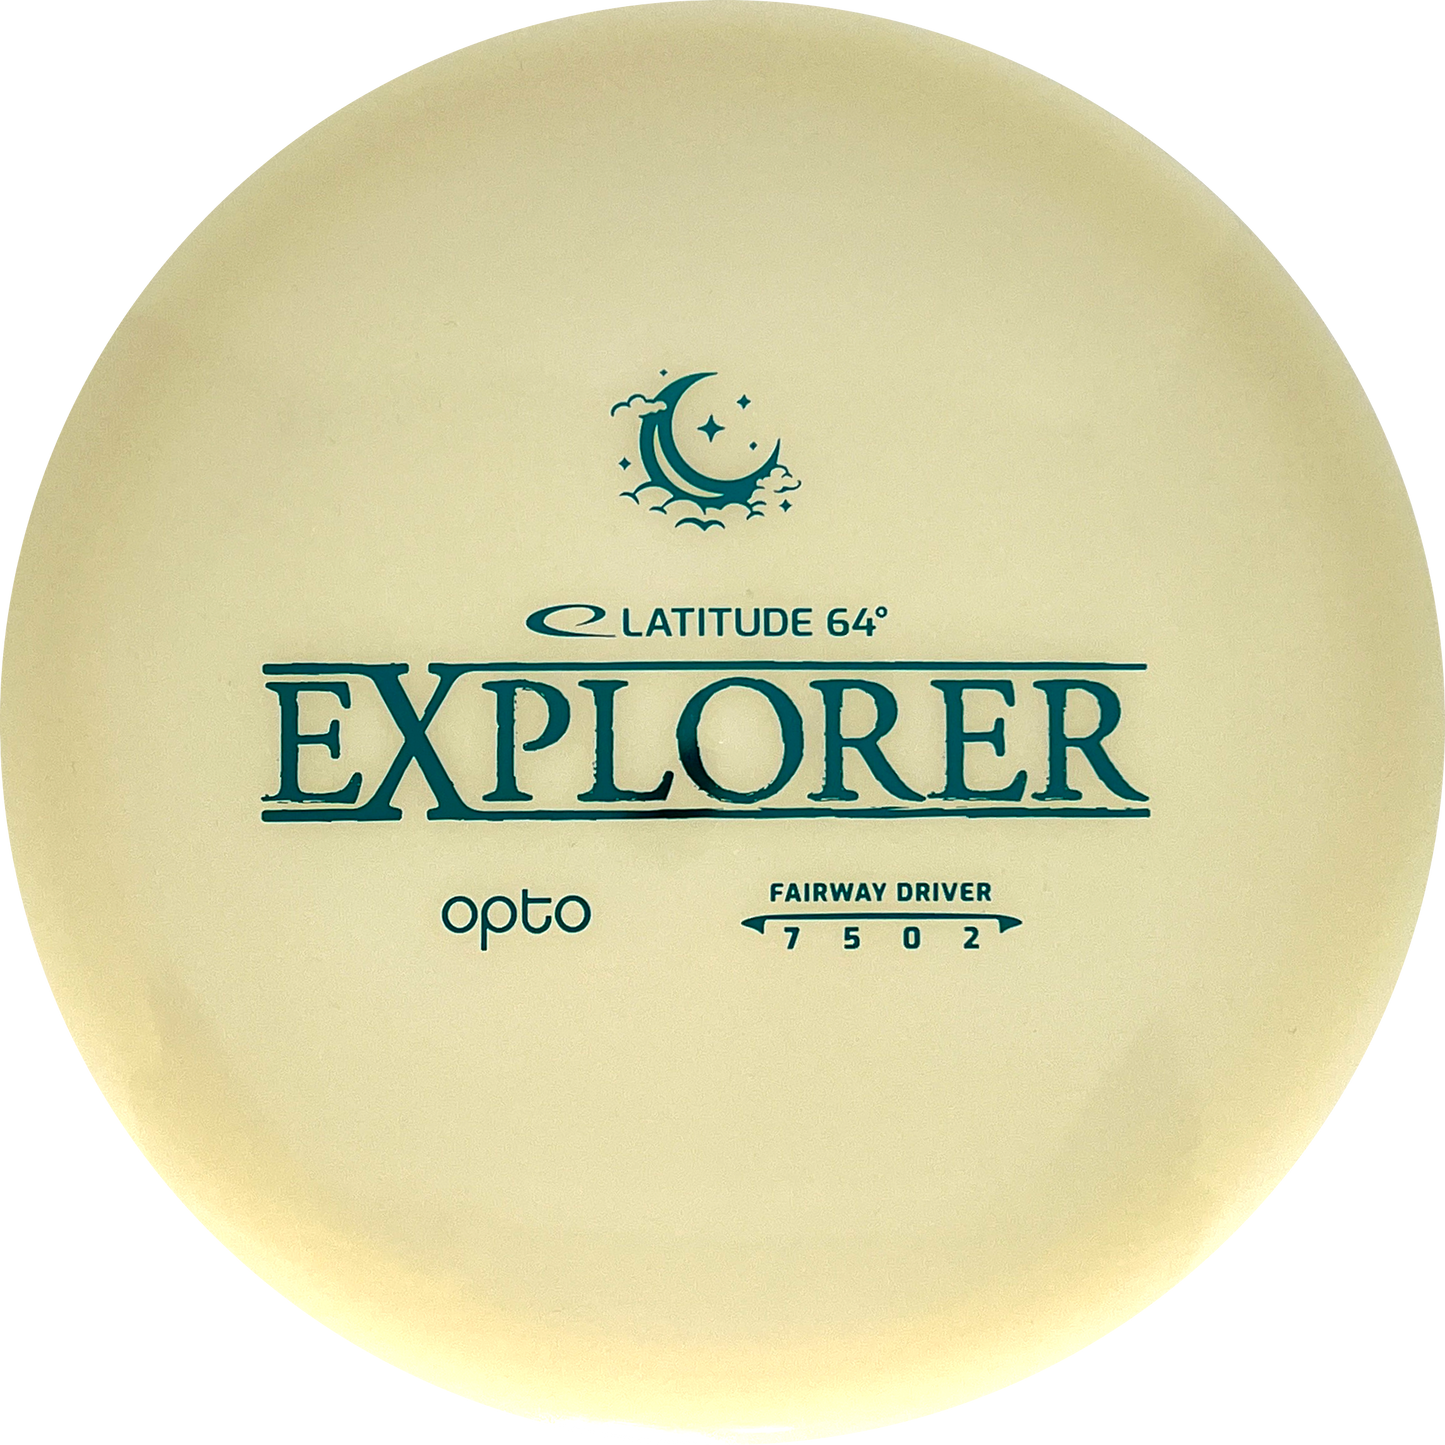 Opto Moonshine Explorer